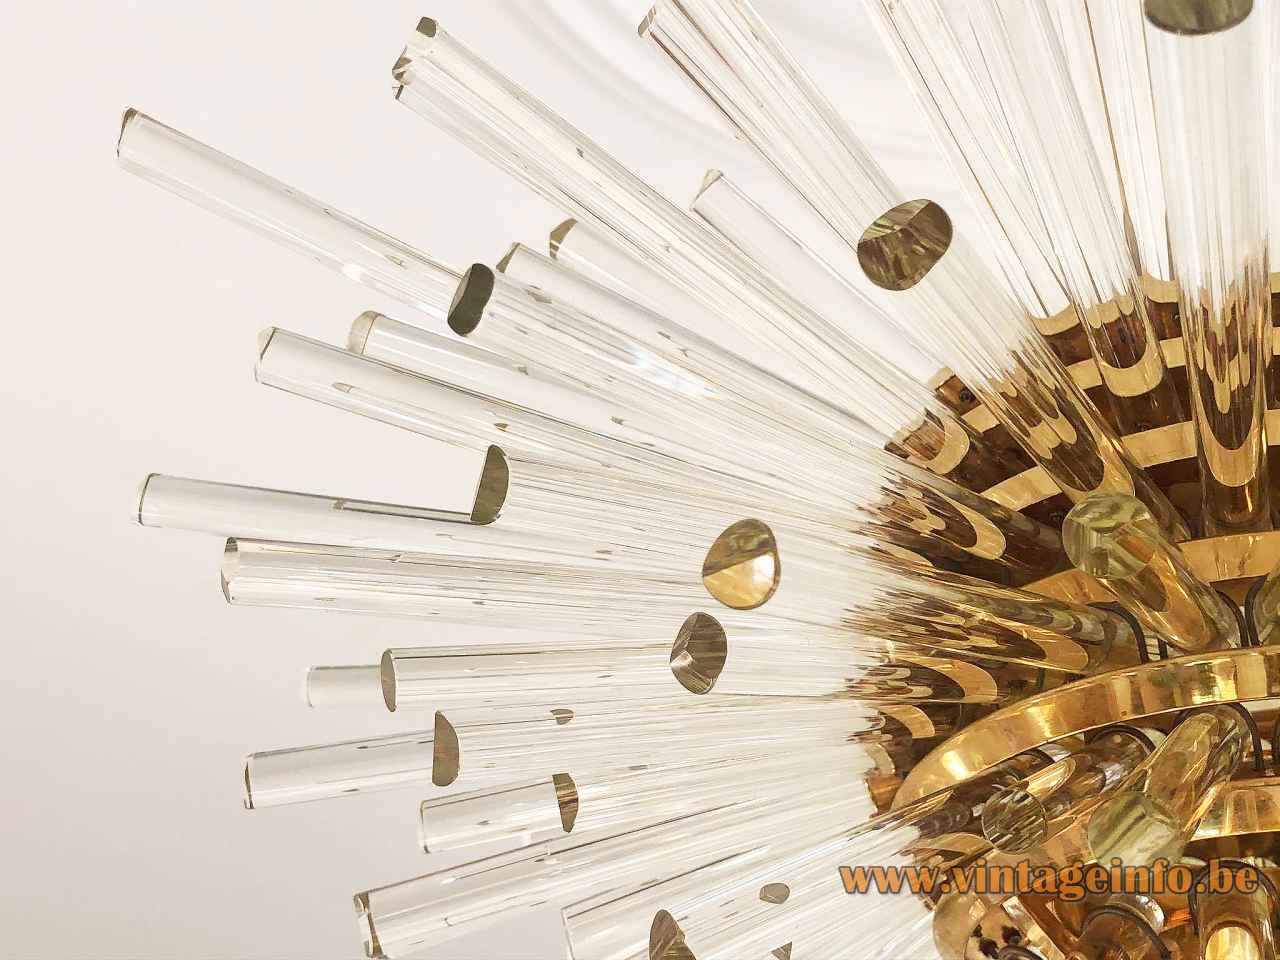 1960s Bakalowits Miracle chandelier model 3317 brass globe lampshade sputnik glass rods sunburst lamp Austria